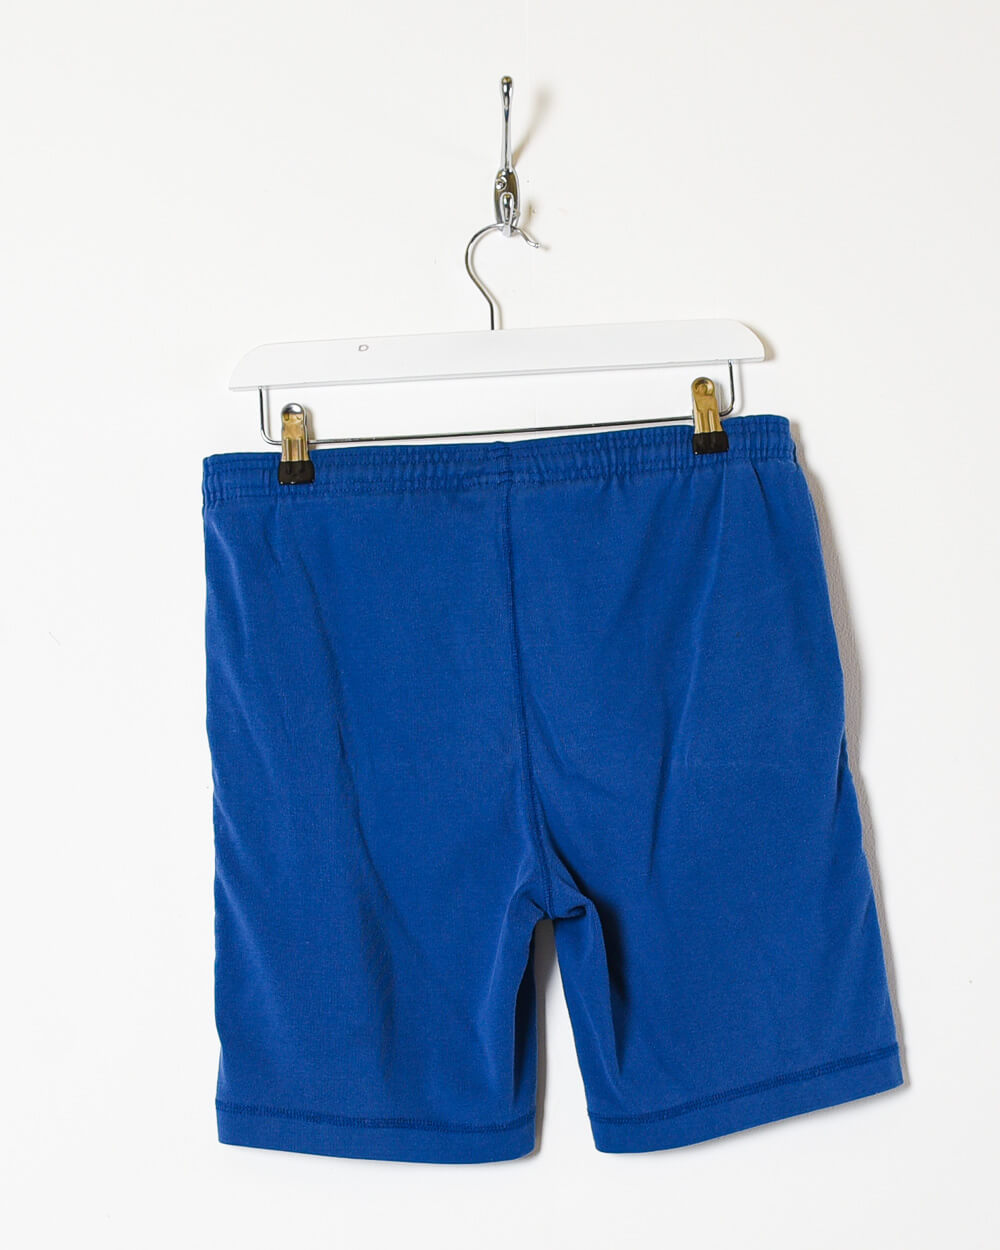 Blue Adidas Streetball Shorts - Small